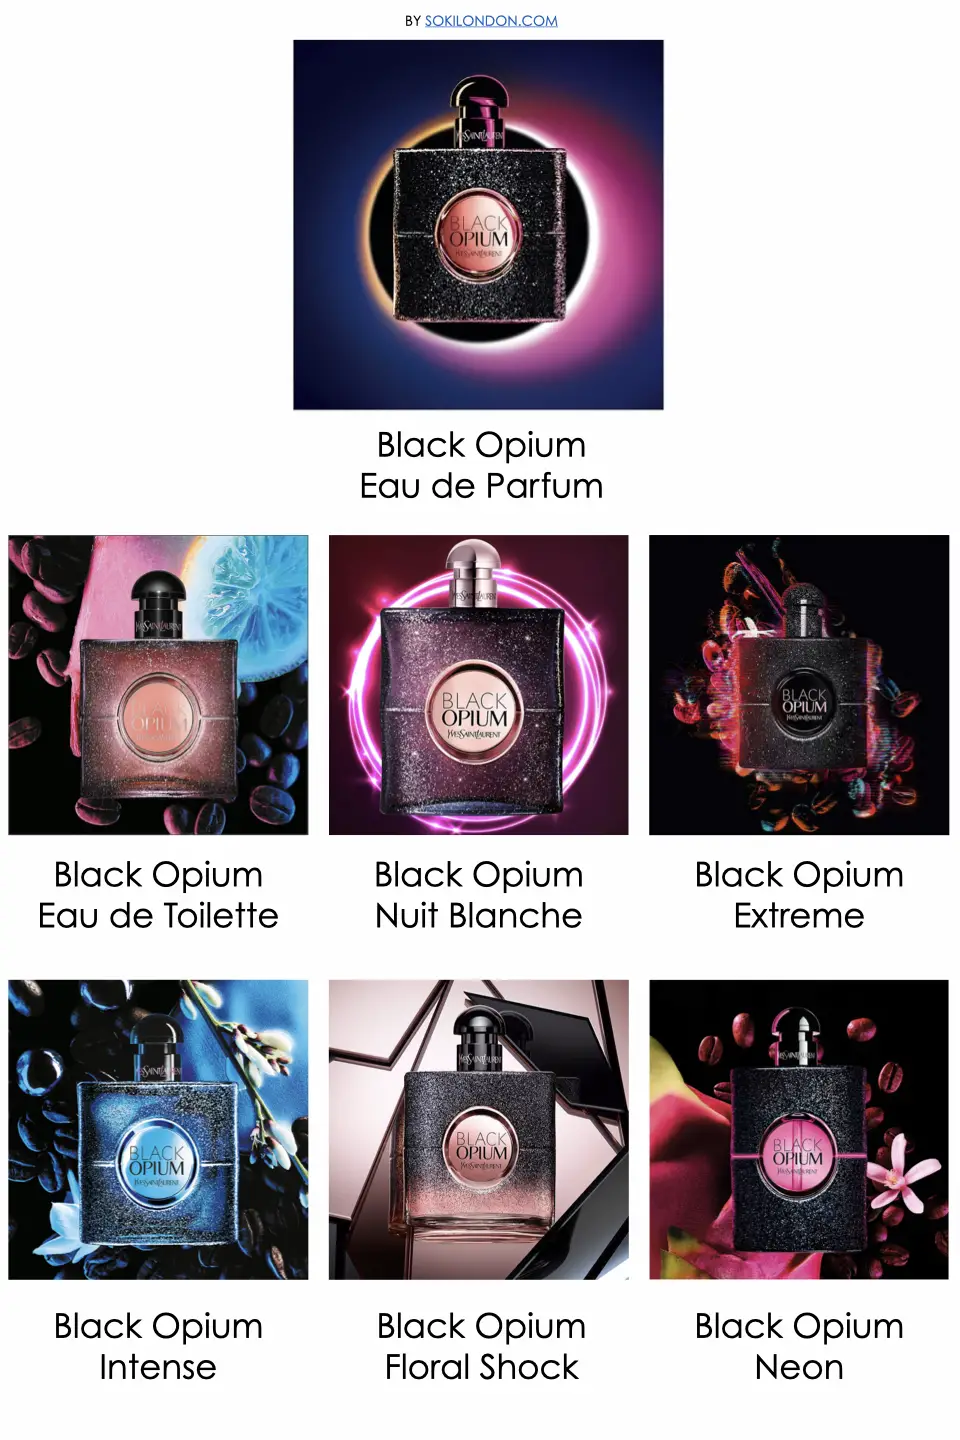 Yves Saint Laurent Black Opium Eau de Parfum Intense, 50ml at John